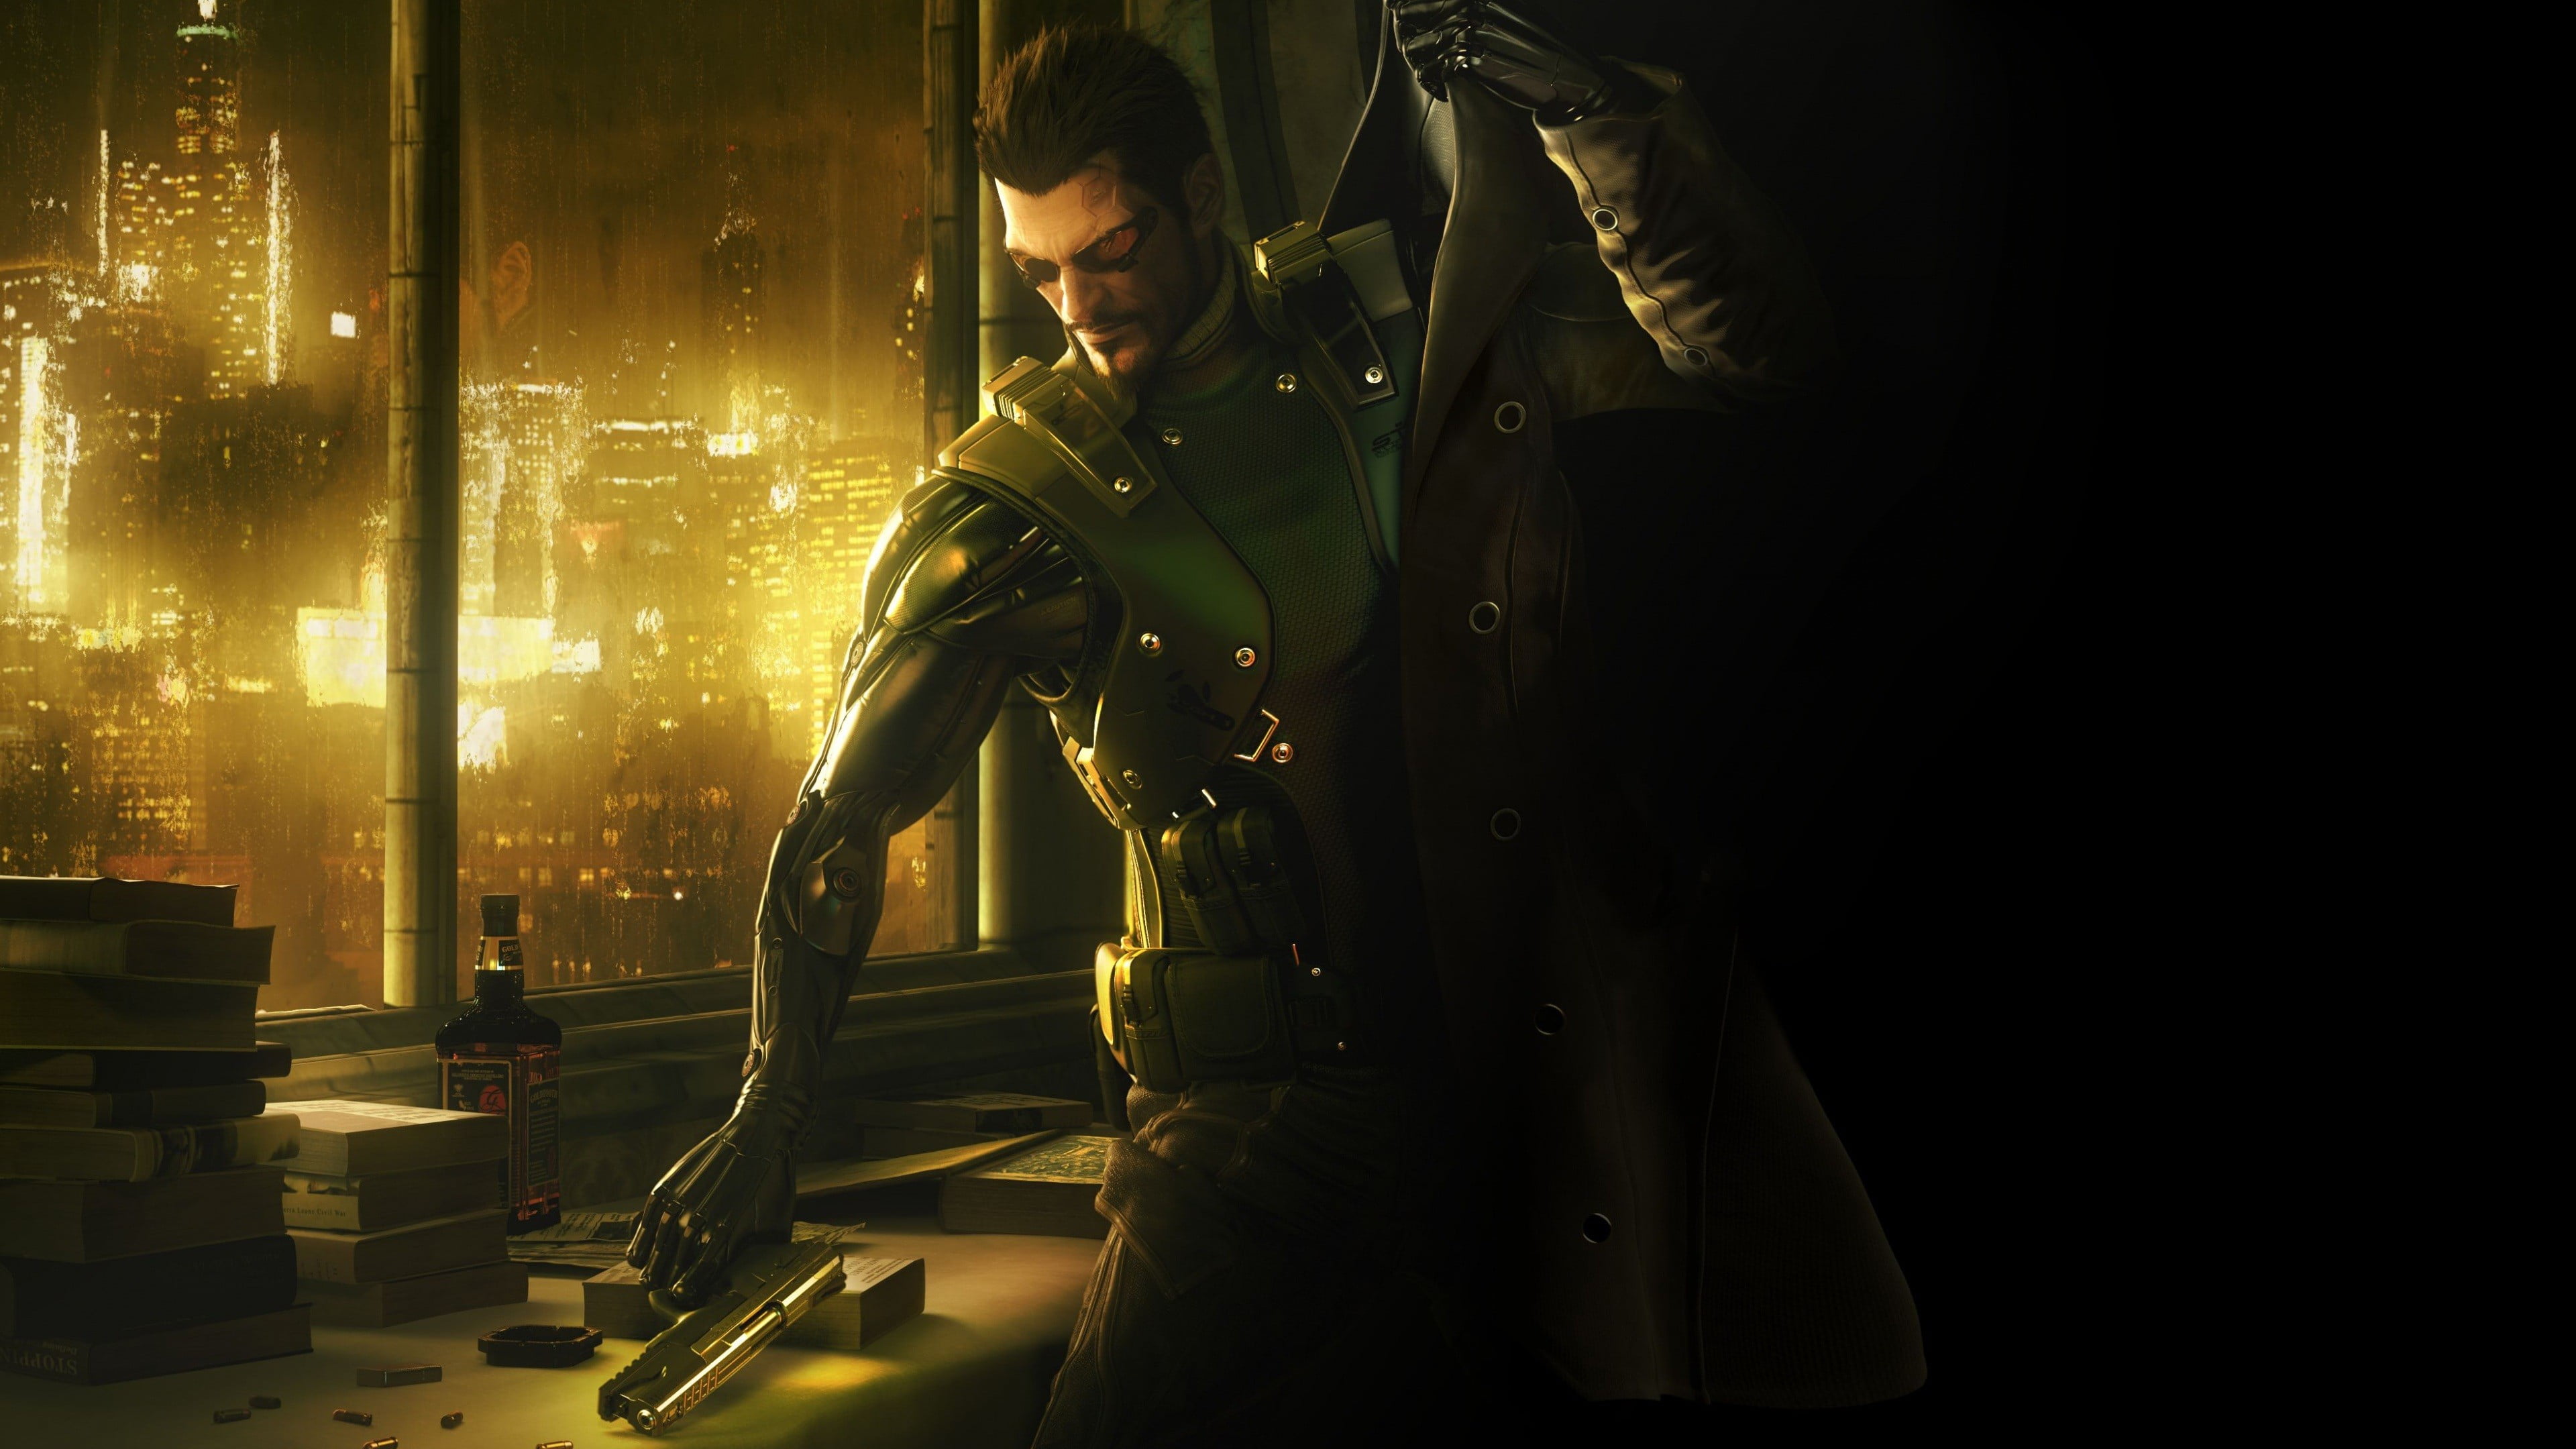 Anime Character Wallpaper Deus Ex Deus Ex Human Revolution Images, Photos, Reviews